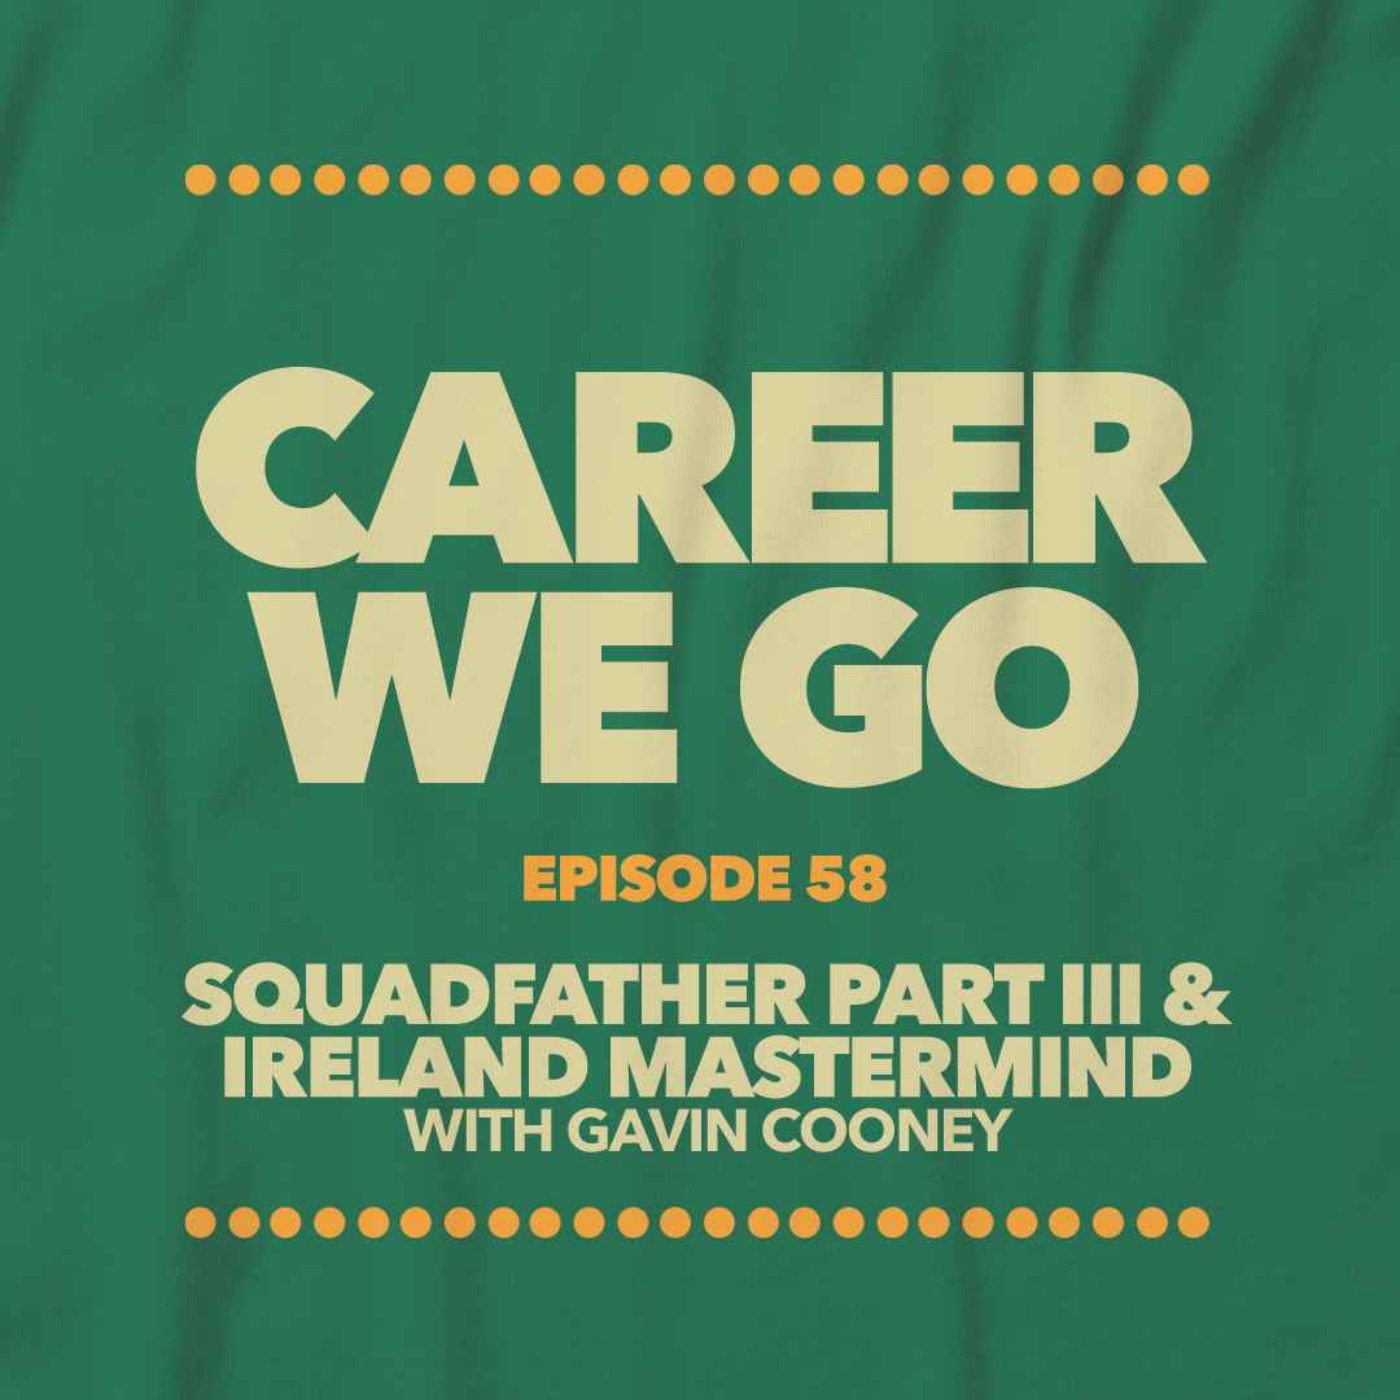 Squadfather Part III & Ireland Mastermind with Gavin Cooney